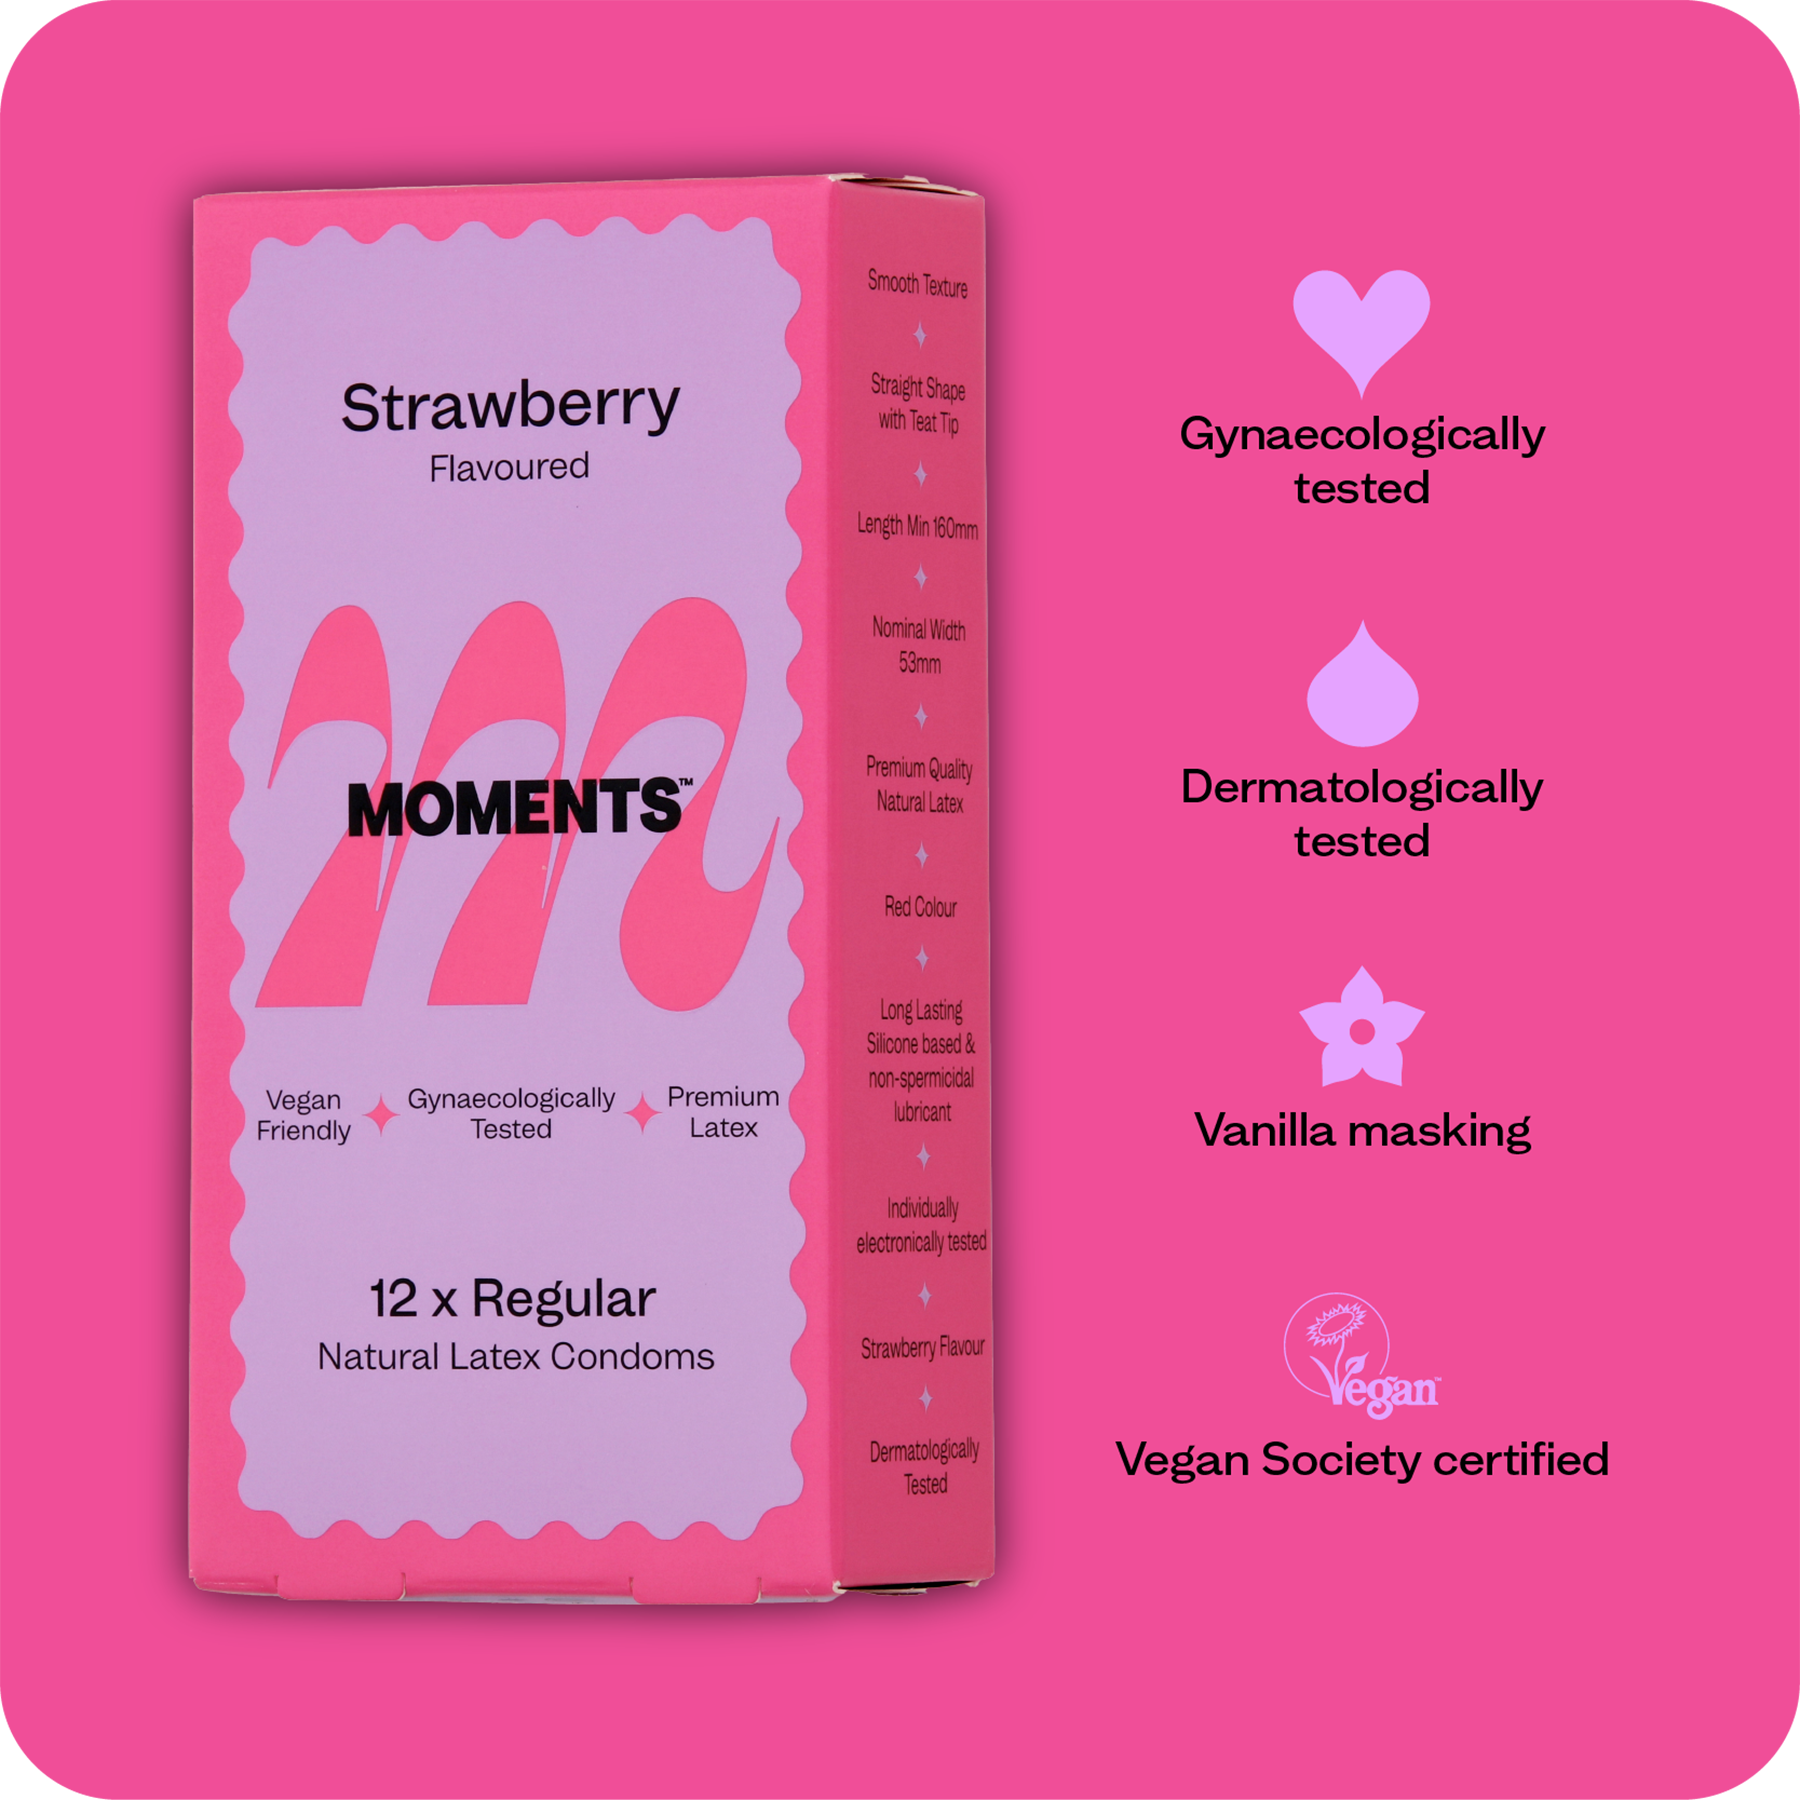 Moments Strawberry flavoured condom key USP